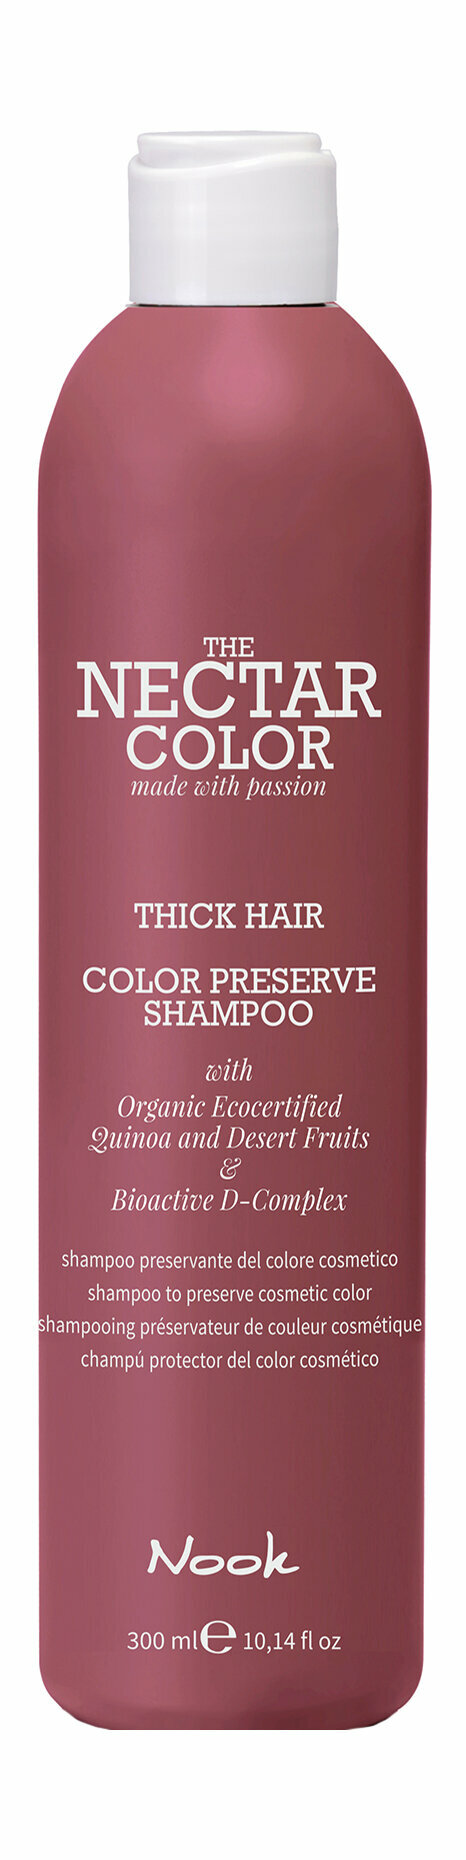 NOOK Color Preserve Shampoo /Thick Hair Шампунь для ухода за окрашенными плотными волосами, 300 мл